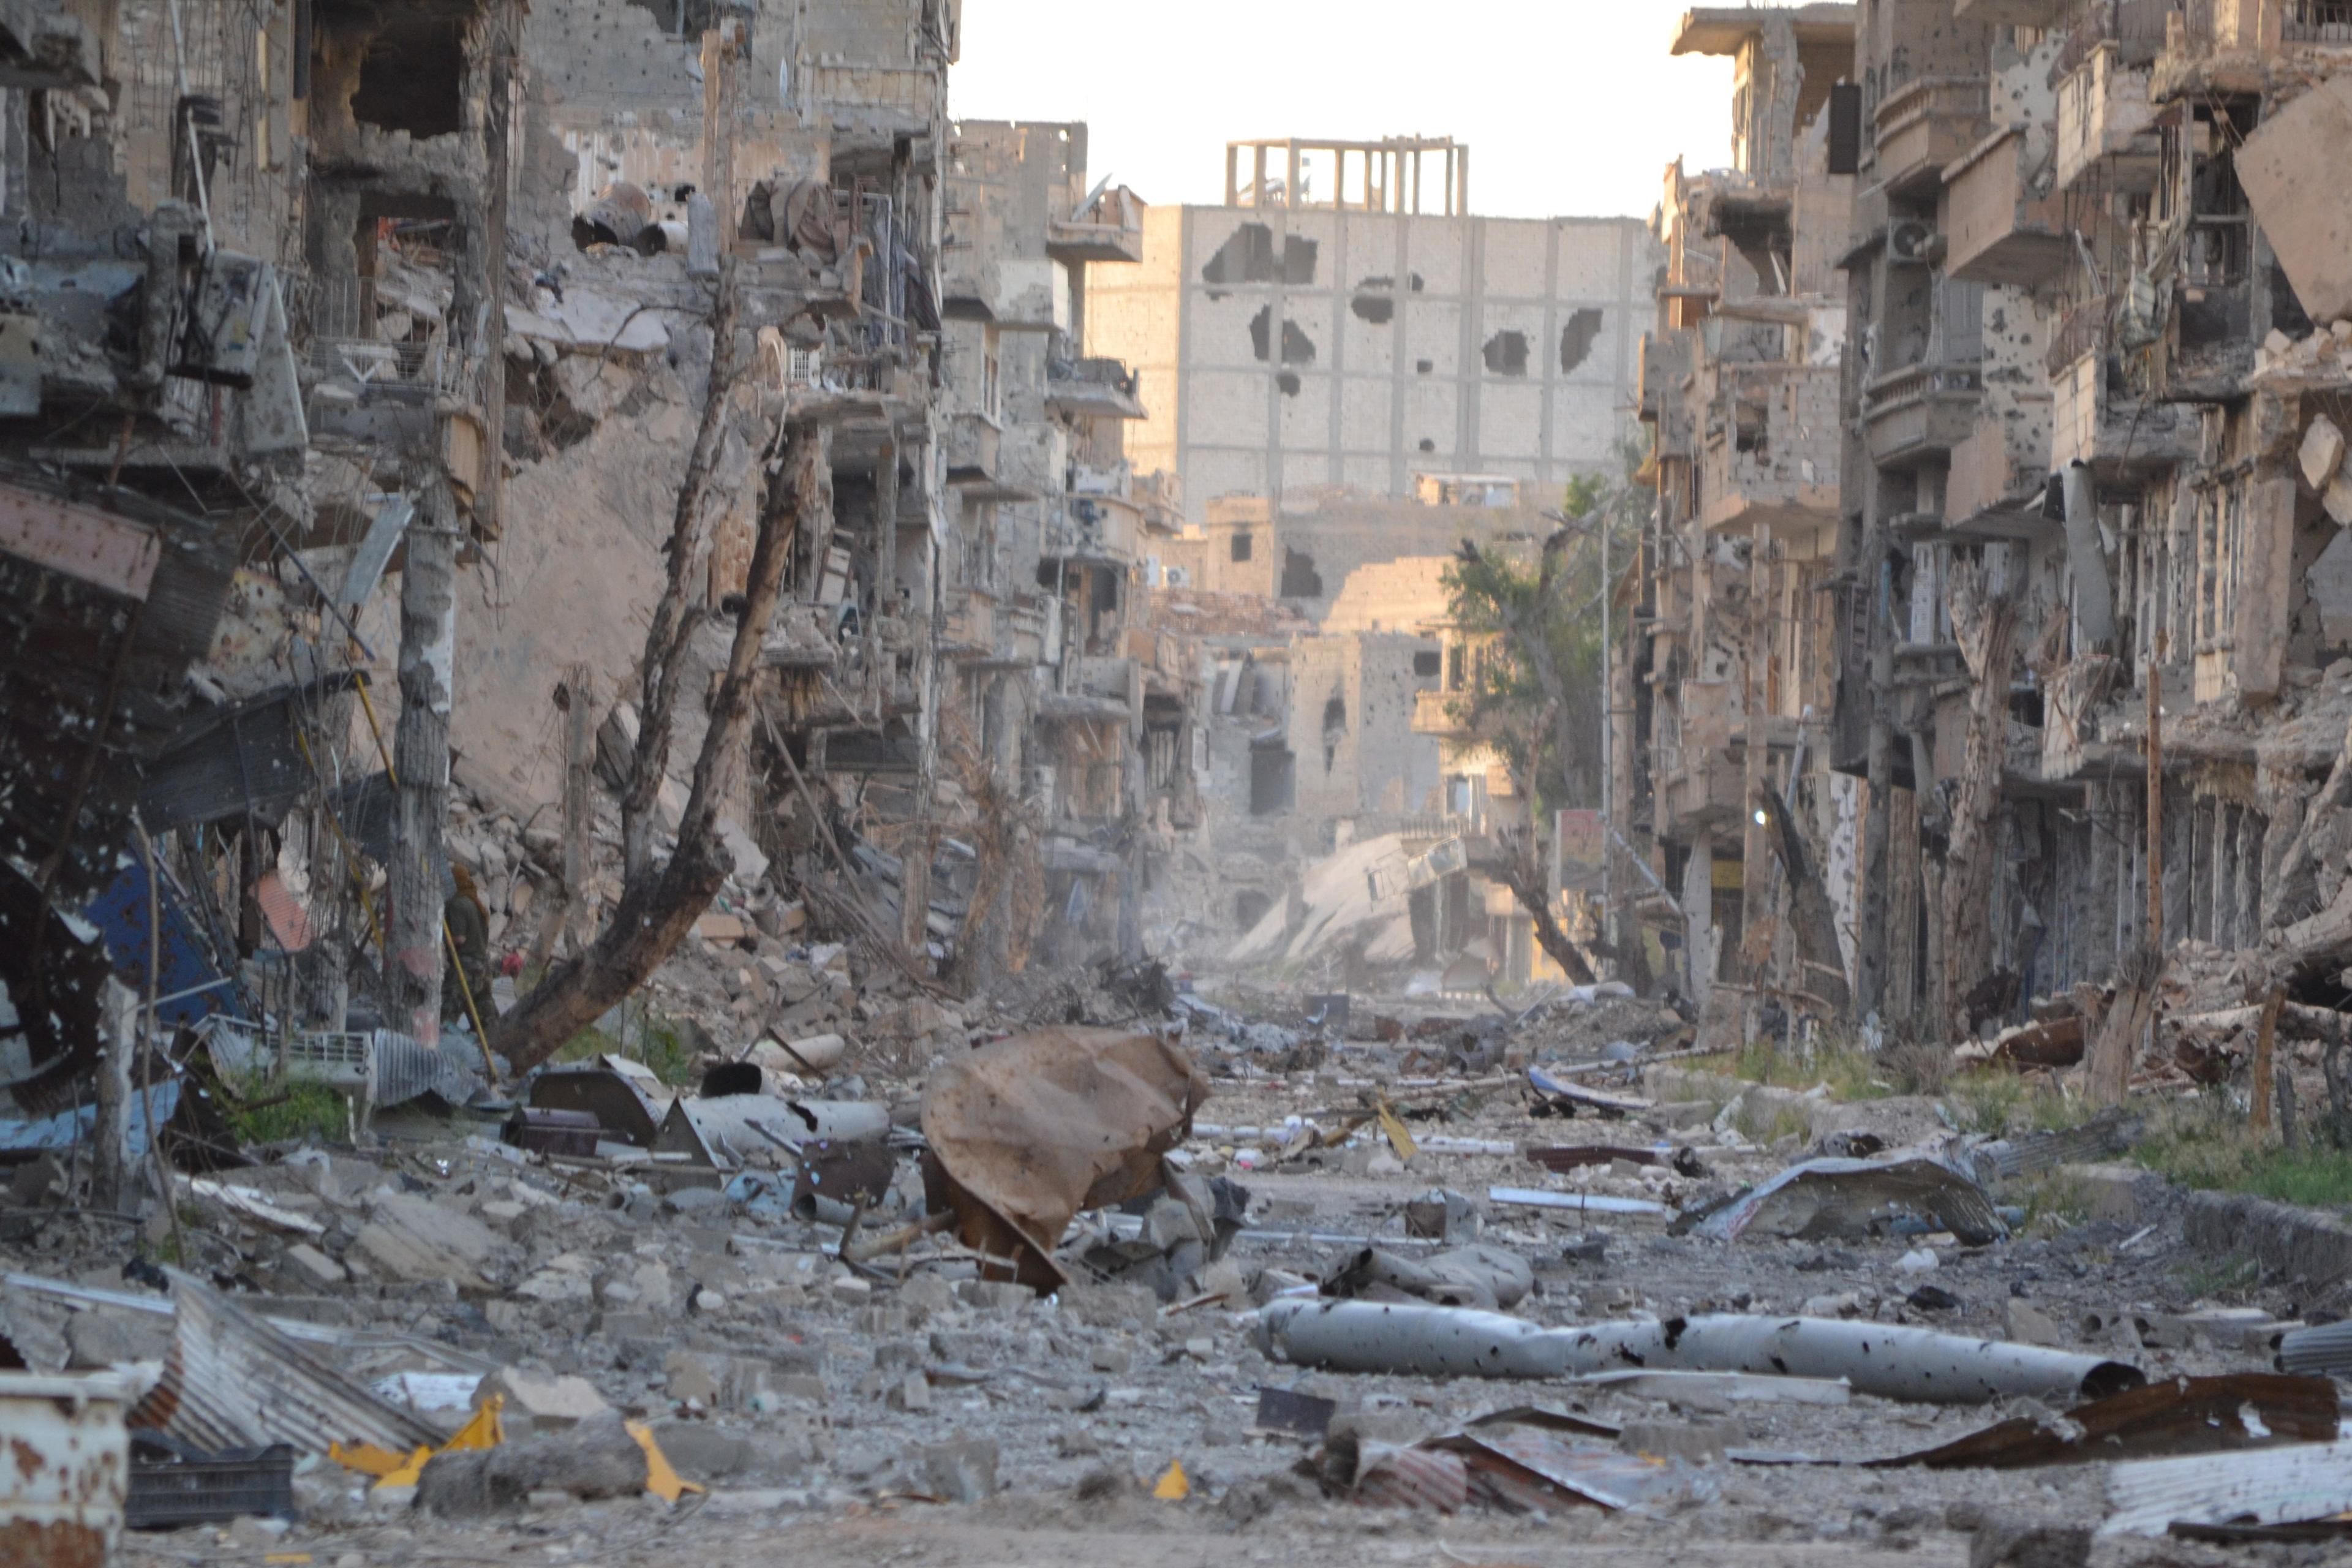 Destruction in the center of the city of DeirEzzor